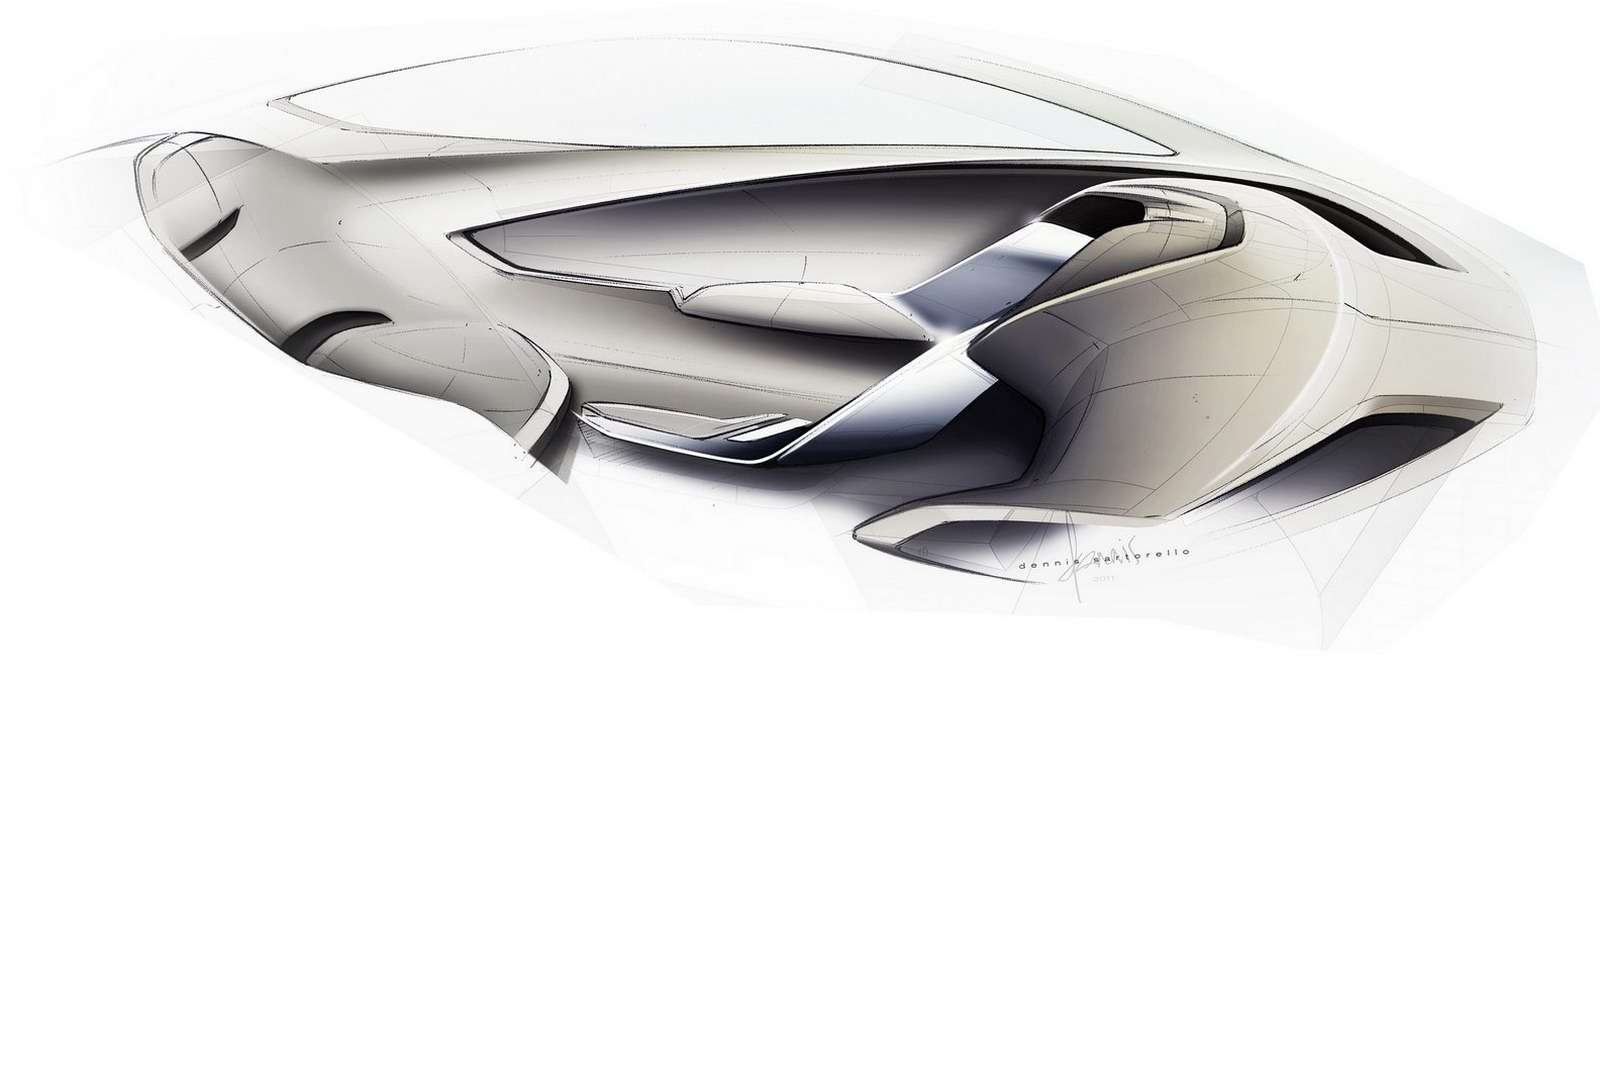 Ford Evos Concept fot sierpien 2011